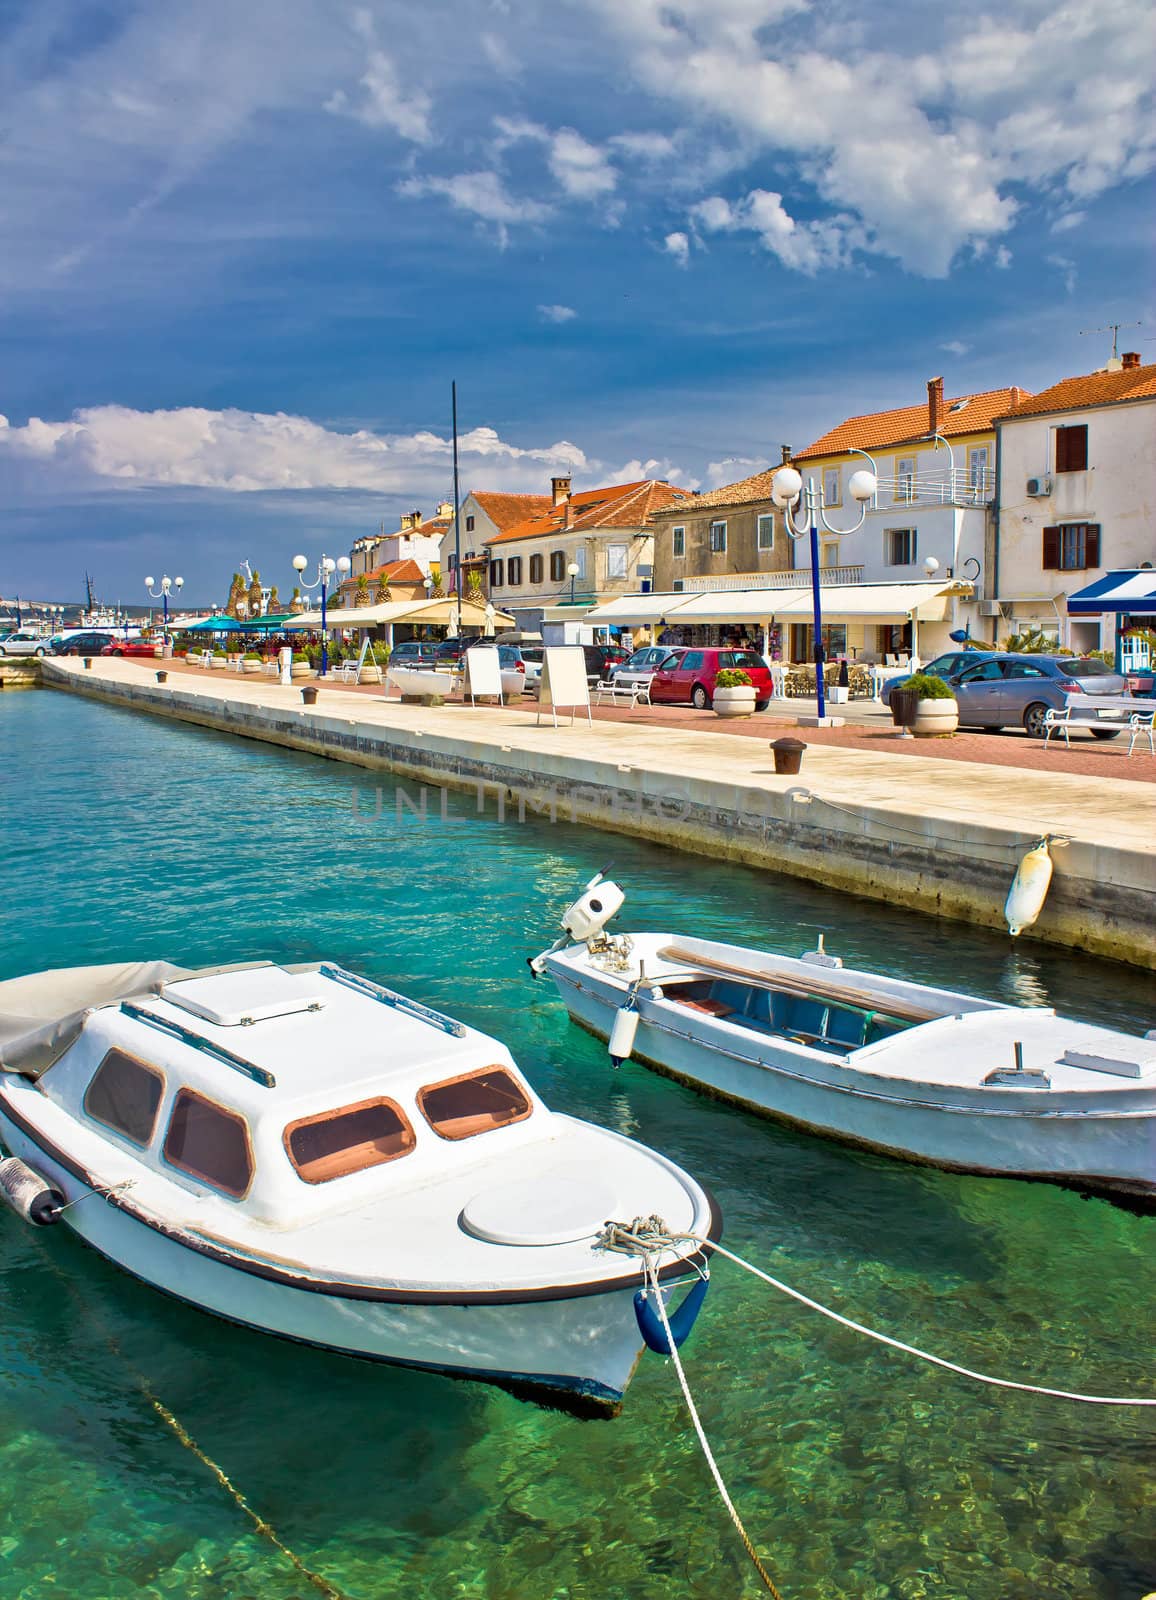 Adriatic town of Biograd na moru waterfront by xbrchx